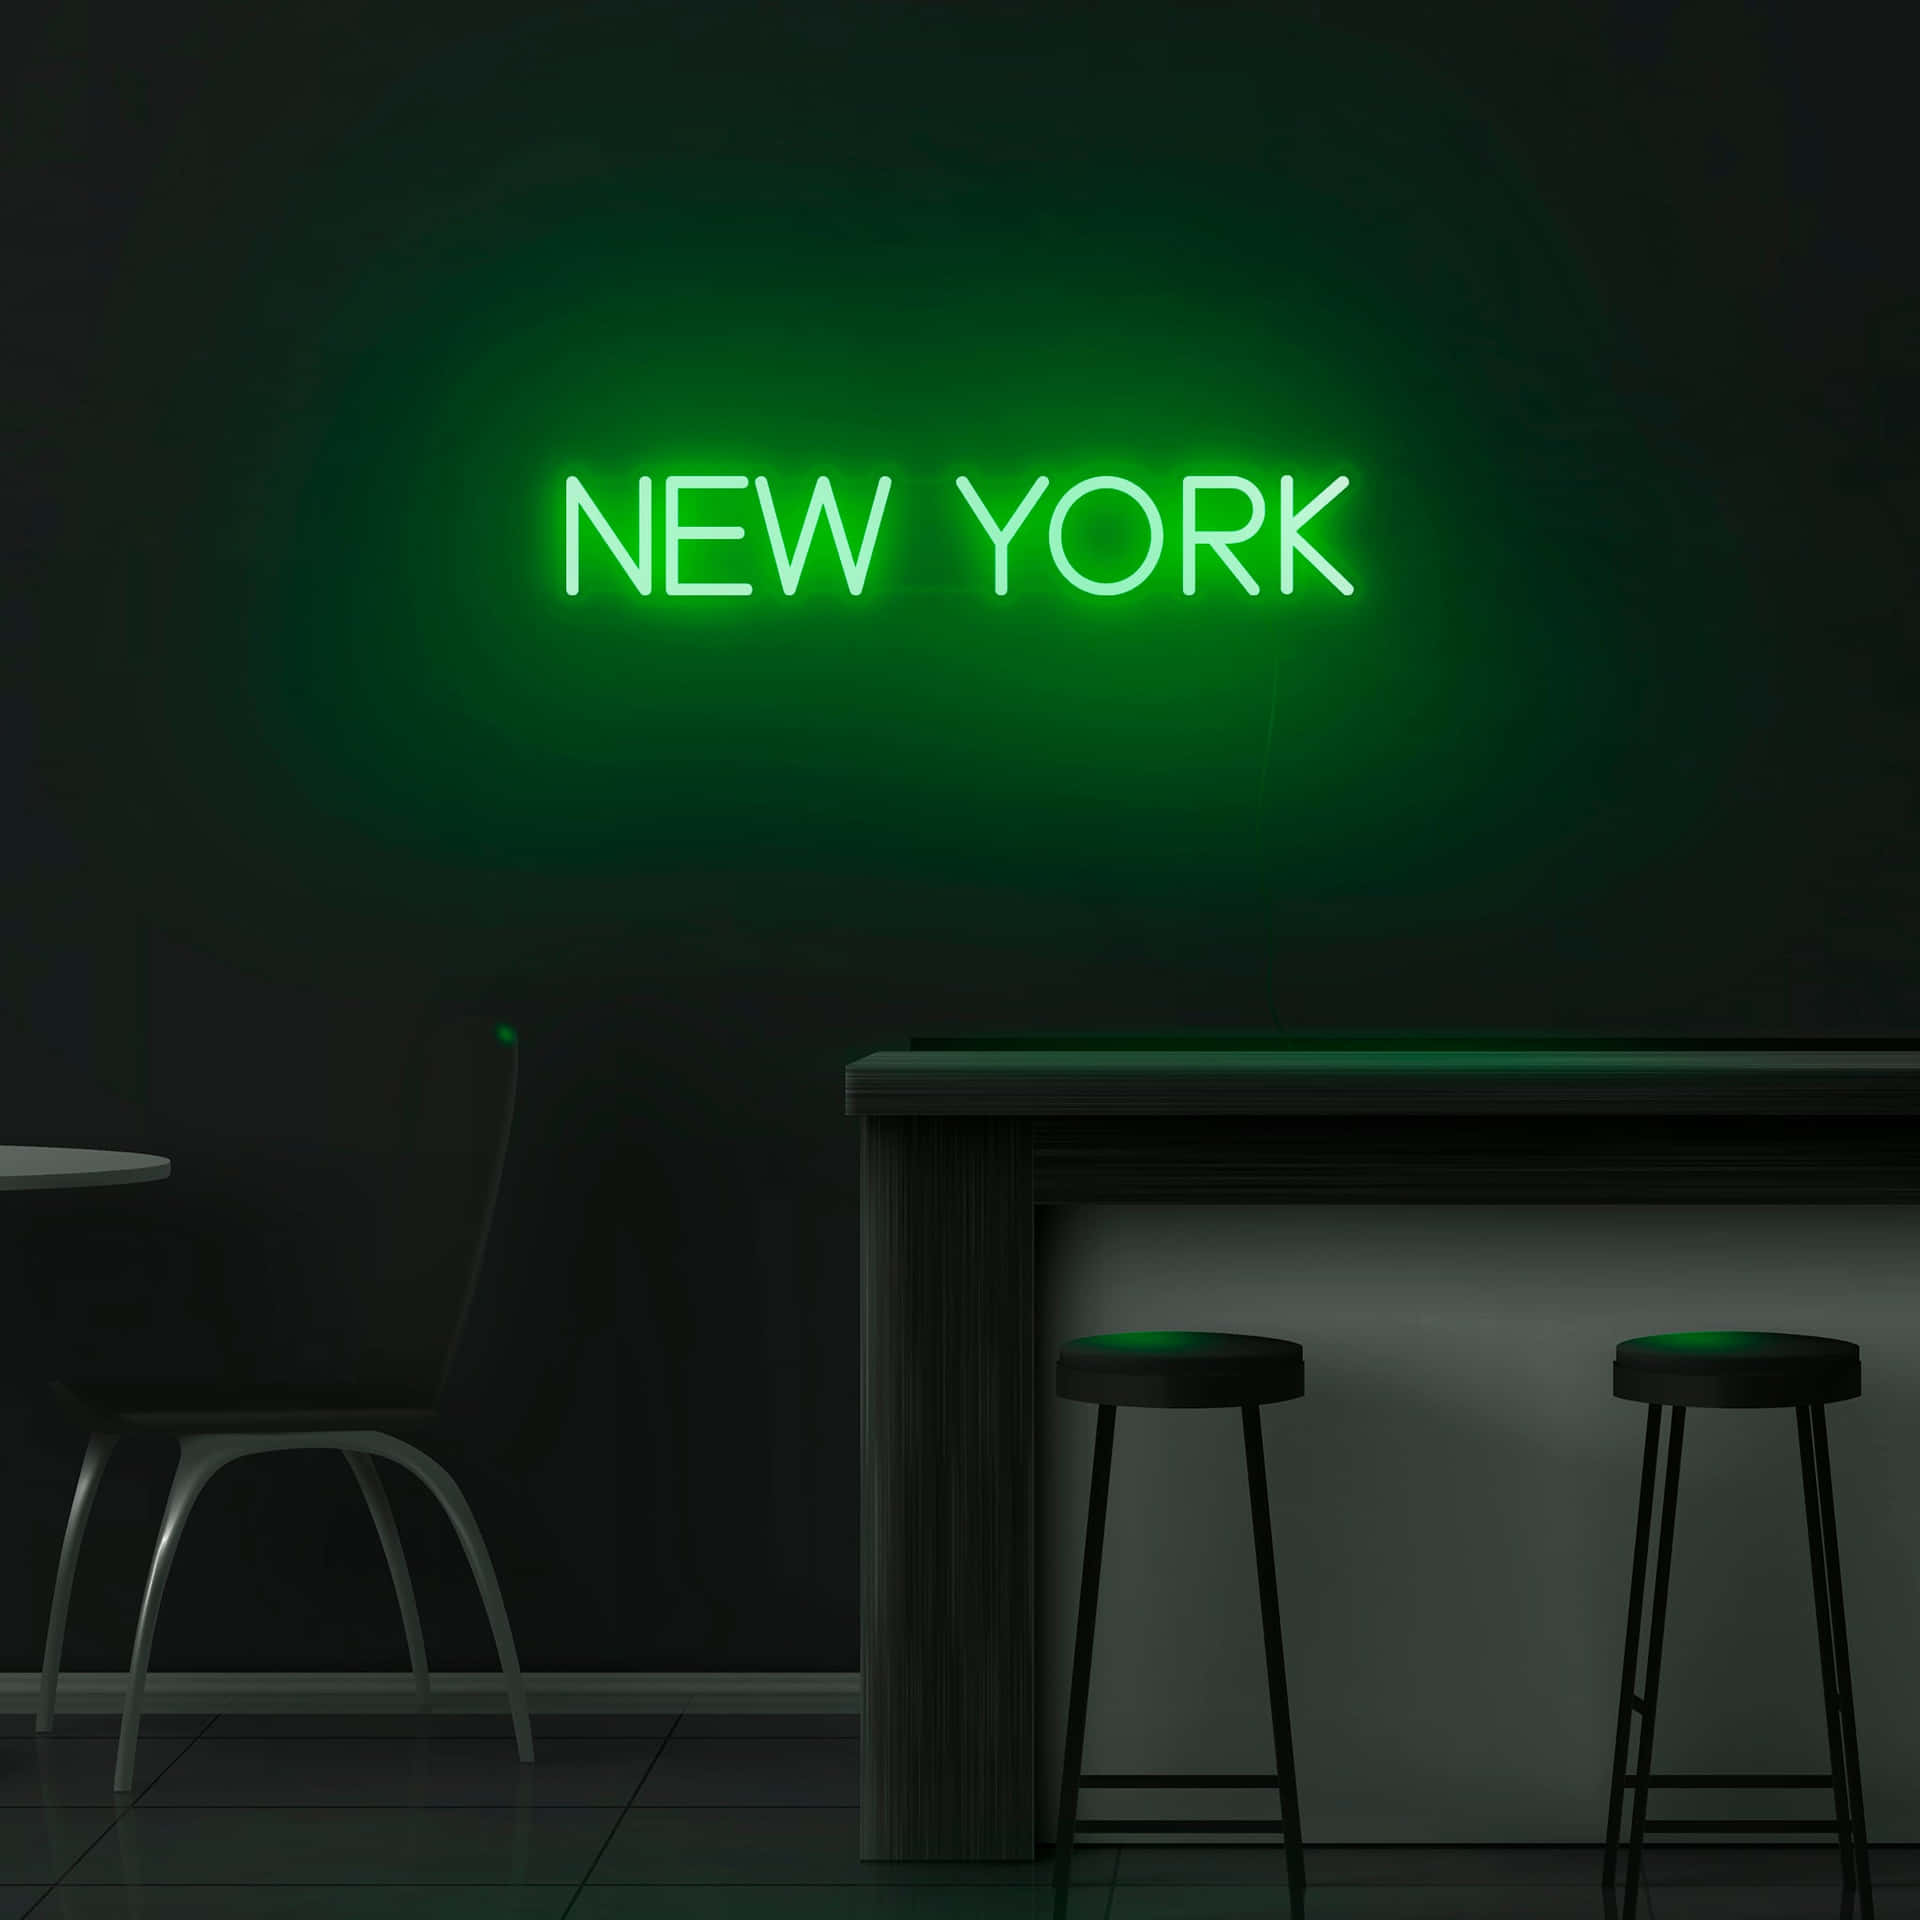 Aesthetic Grunge Green Neon New York Signs Wallpaper